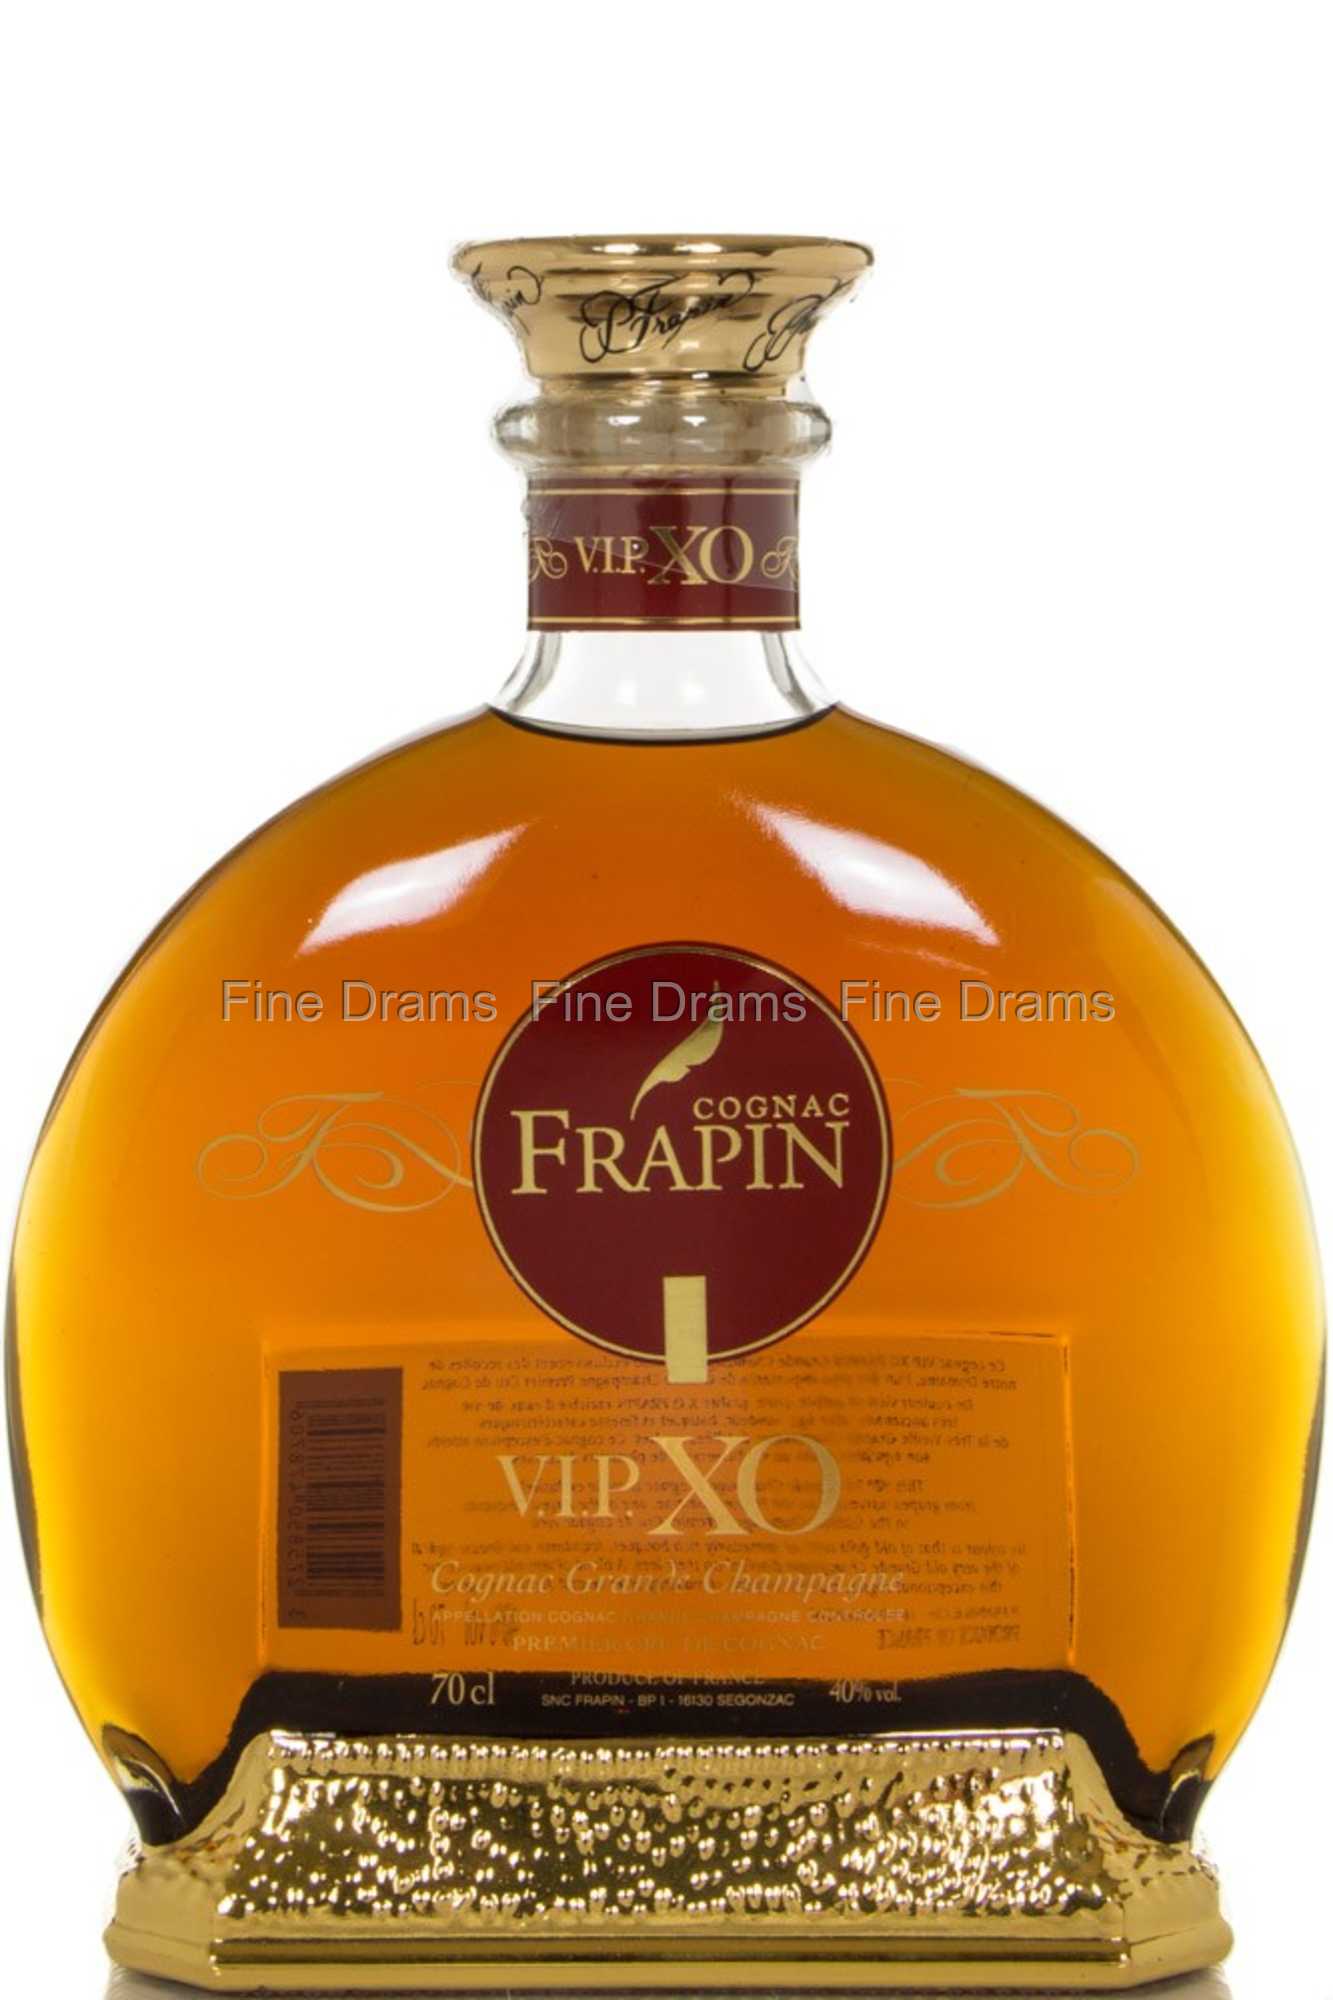 Frapin 0.7. Коньяк Фрапен вип Хо. Frapin XO VIP Cognac. Коньяк фонтпинот Фрапен Хо. Фрапен XO VIP 0.7.